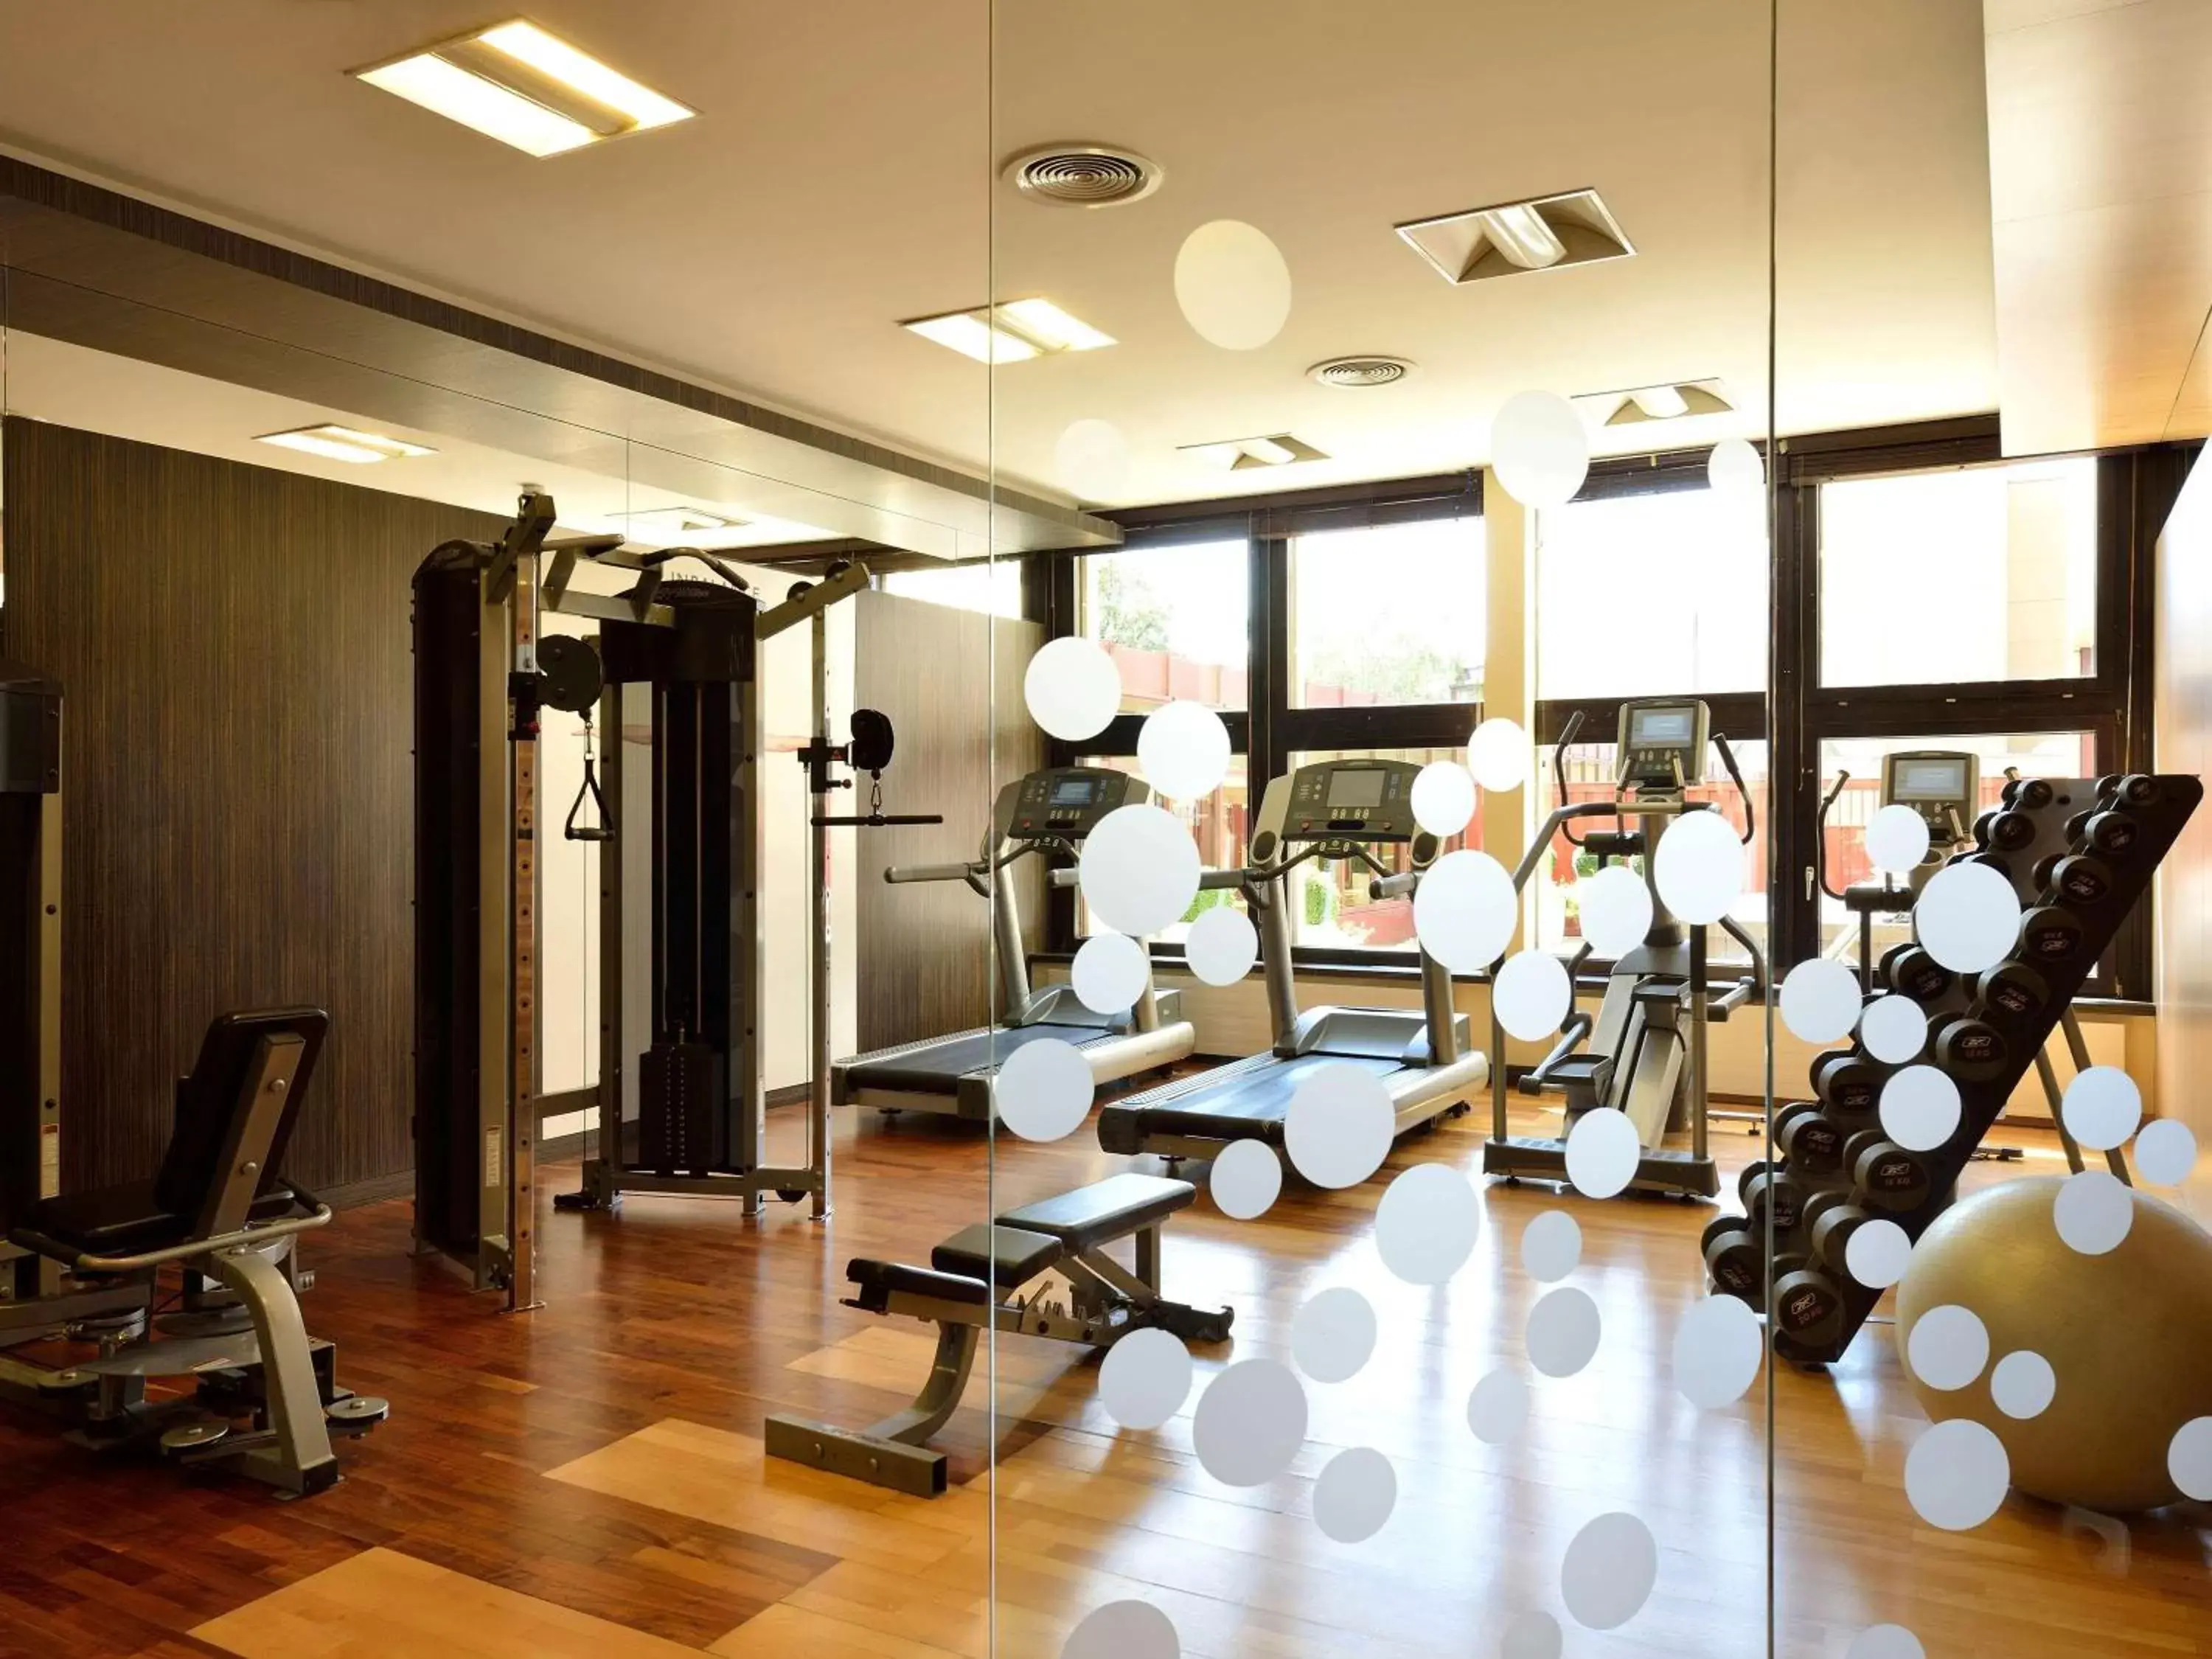 Fitness centre/facilities, Fitness Center/Facilities in Novotel Budapest City